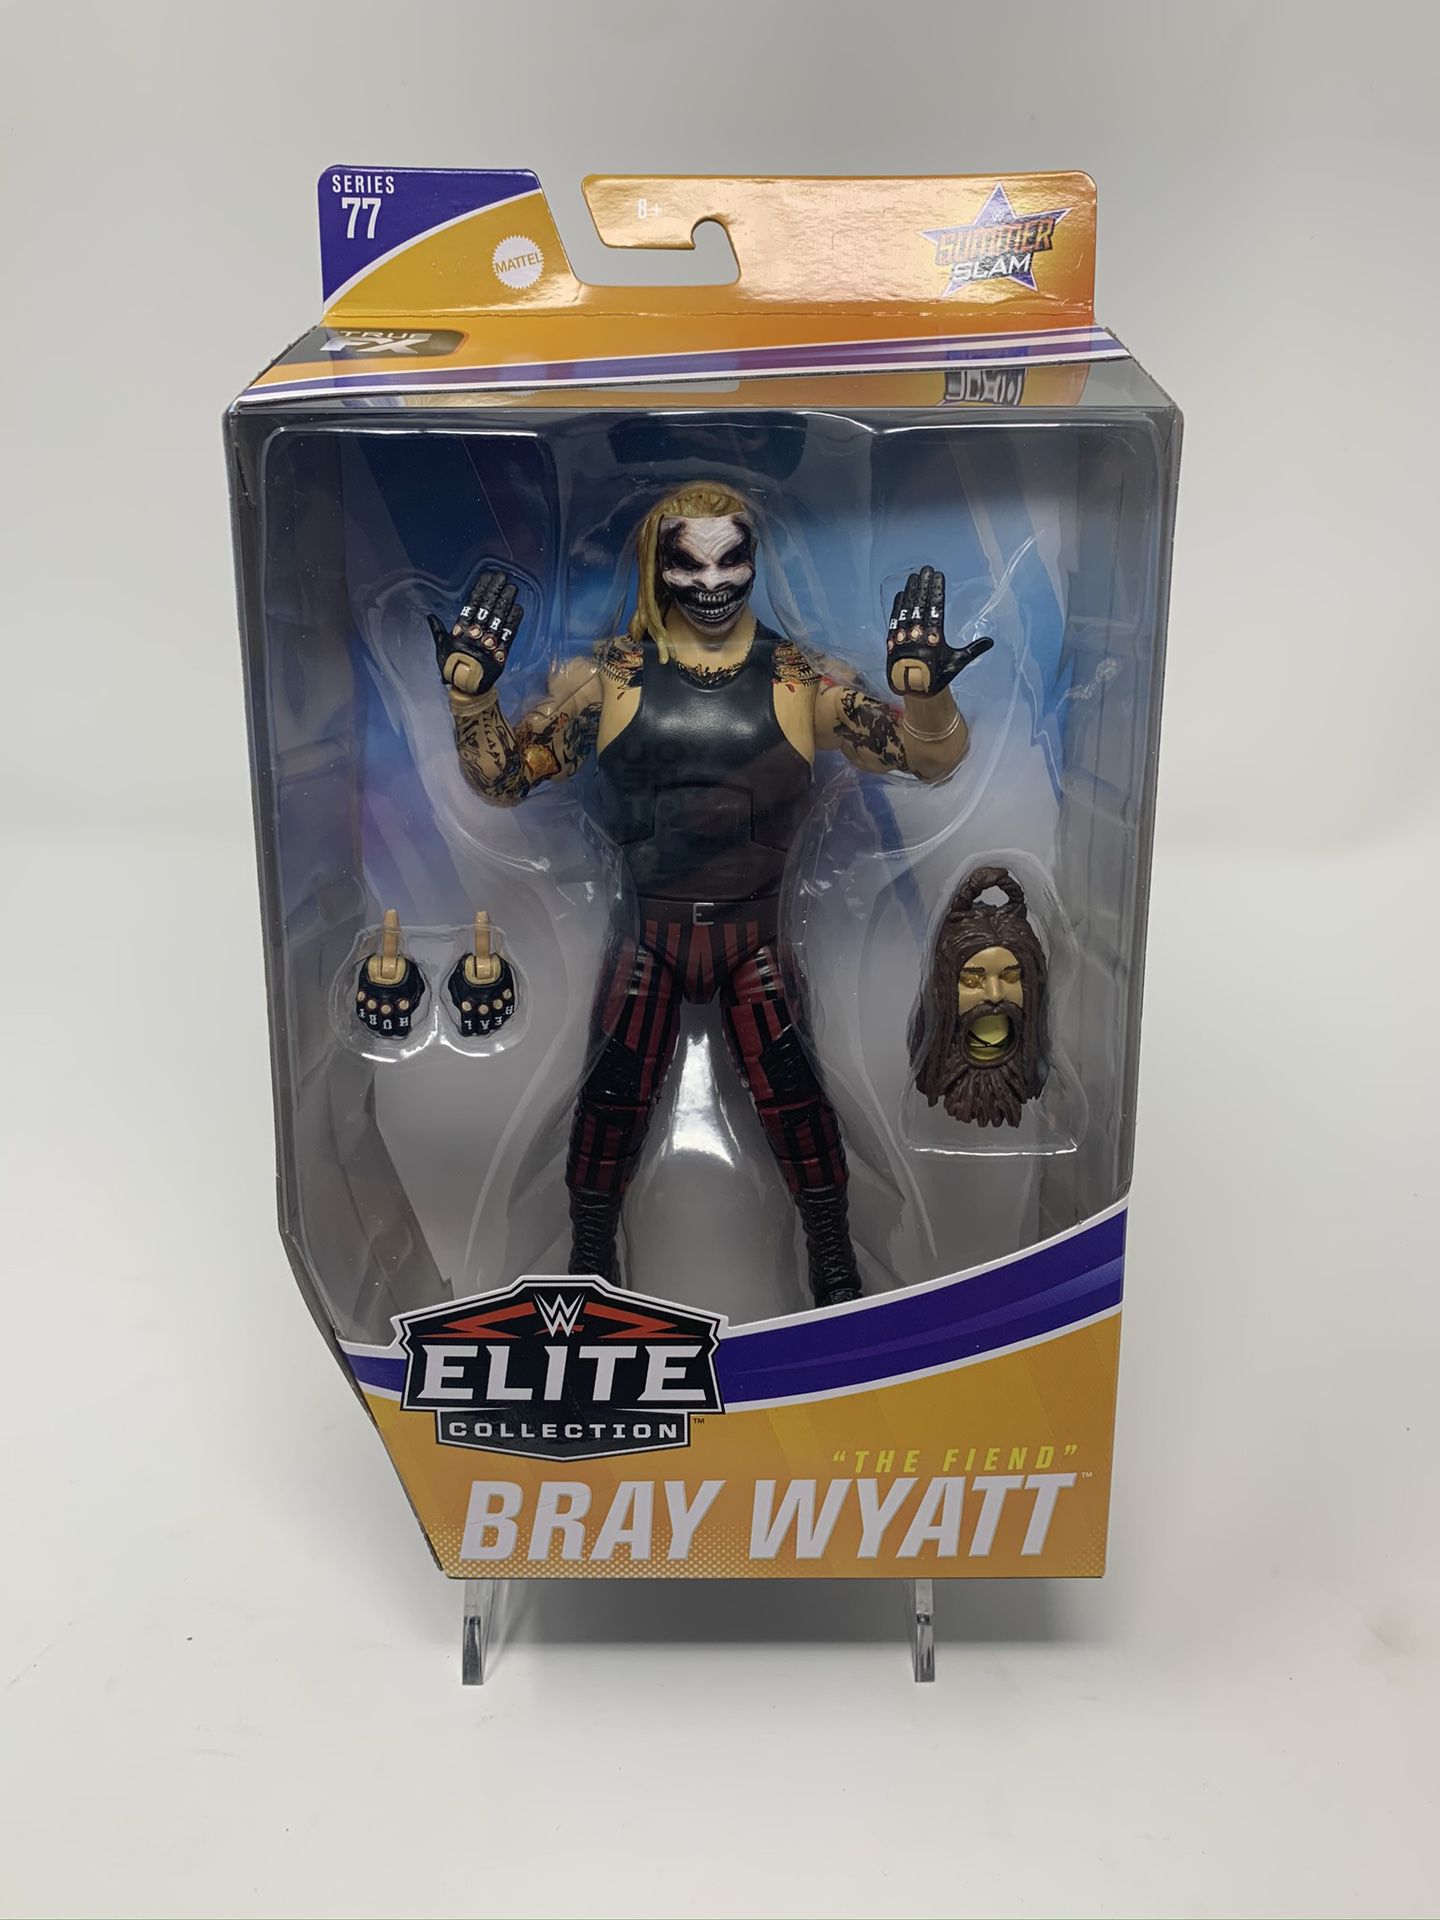 Bray Wyatt “The Fiend” WWE Elite Series 77 Action Figure (Brand New)